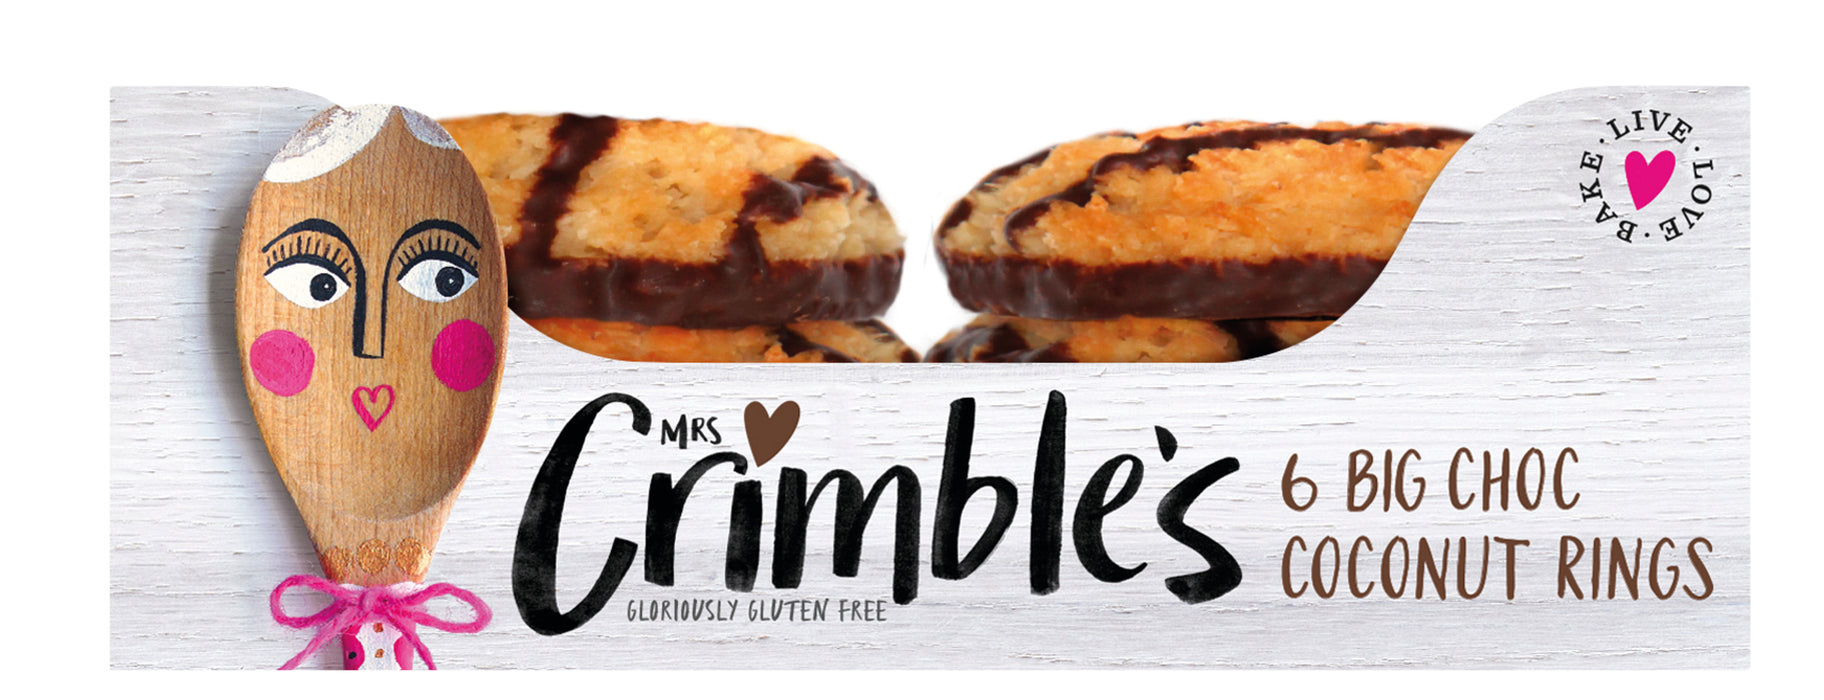 Mrs Crimbles Choc Rings Gluten Free 200g